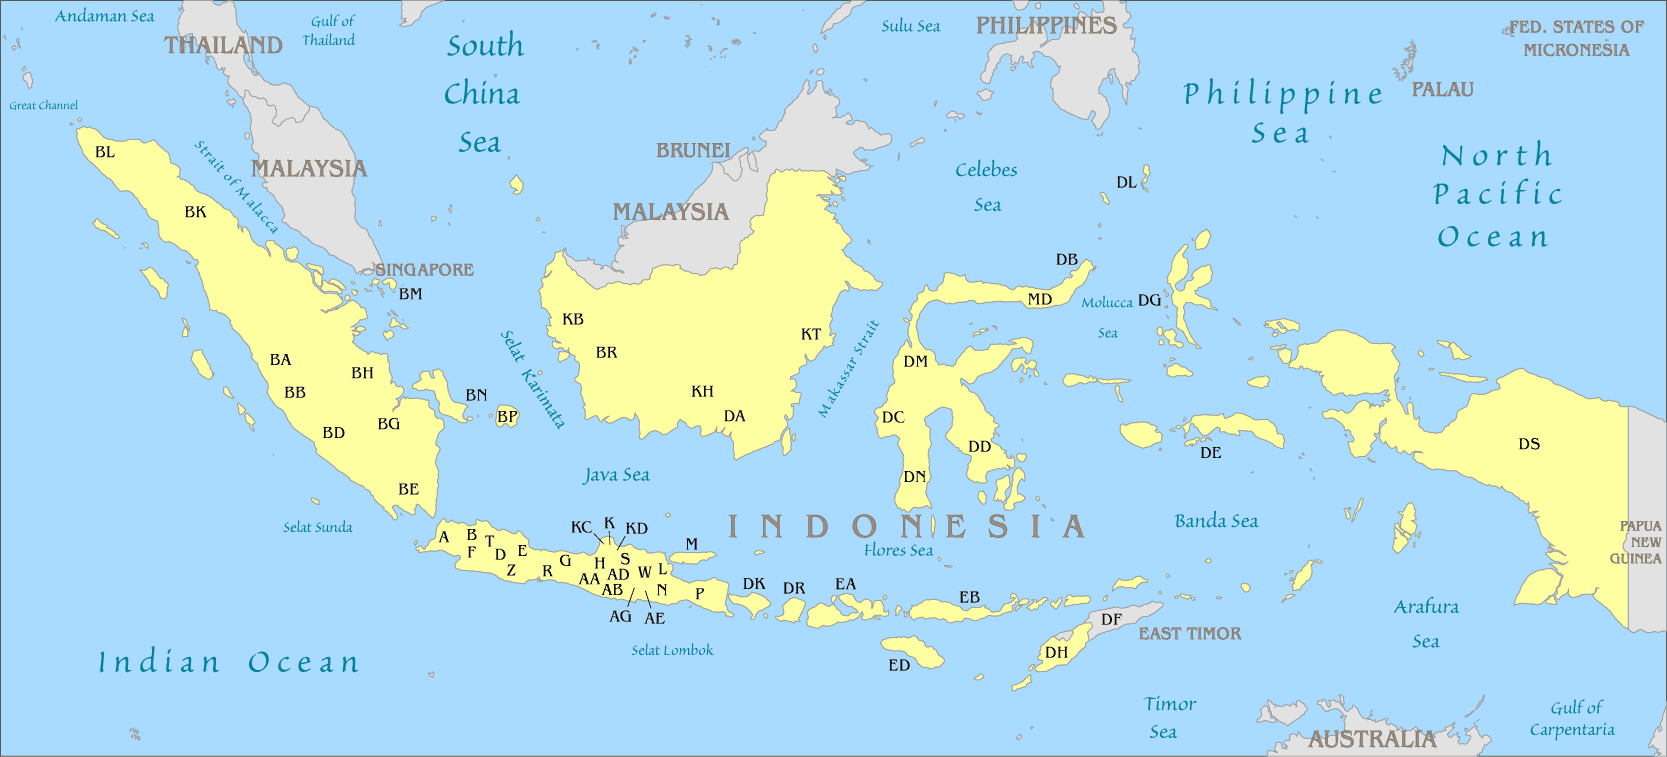 Indonesialicenseplatesmap